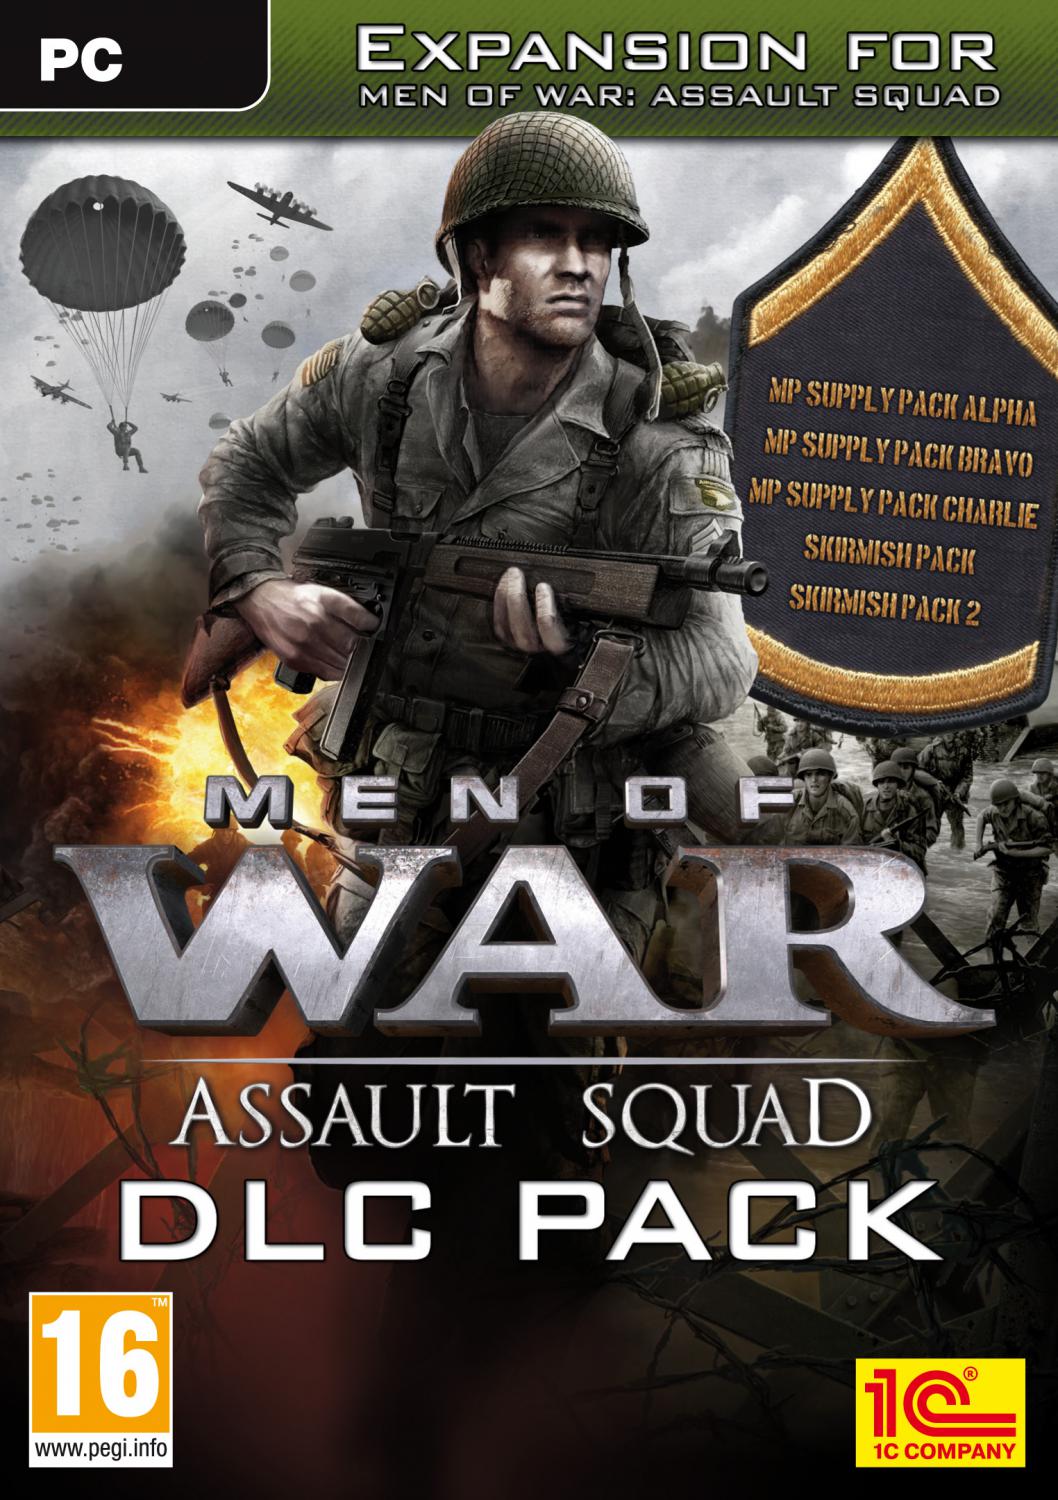 Men of War: Assault Squad 5 DLC Pack